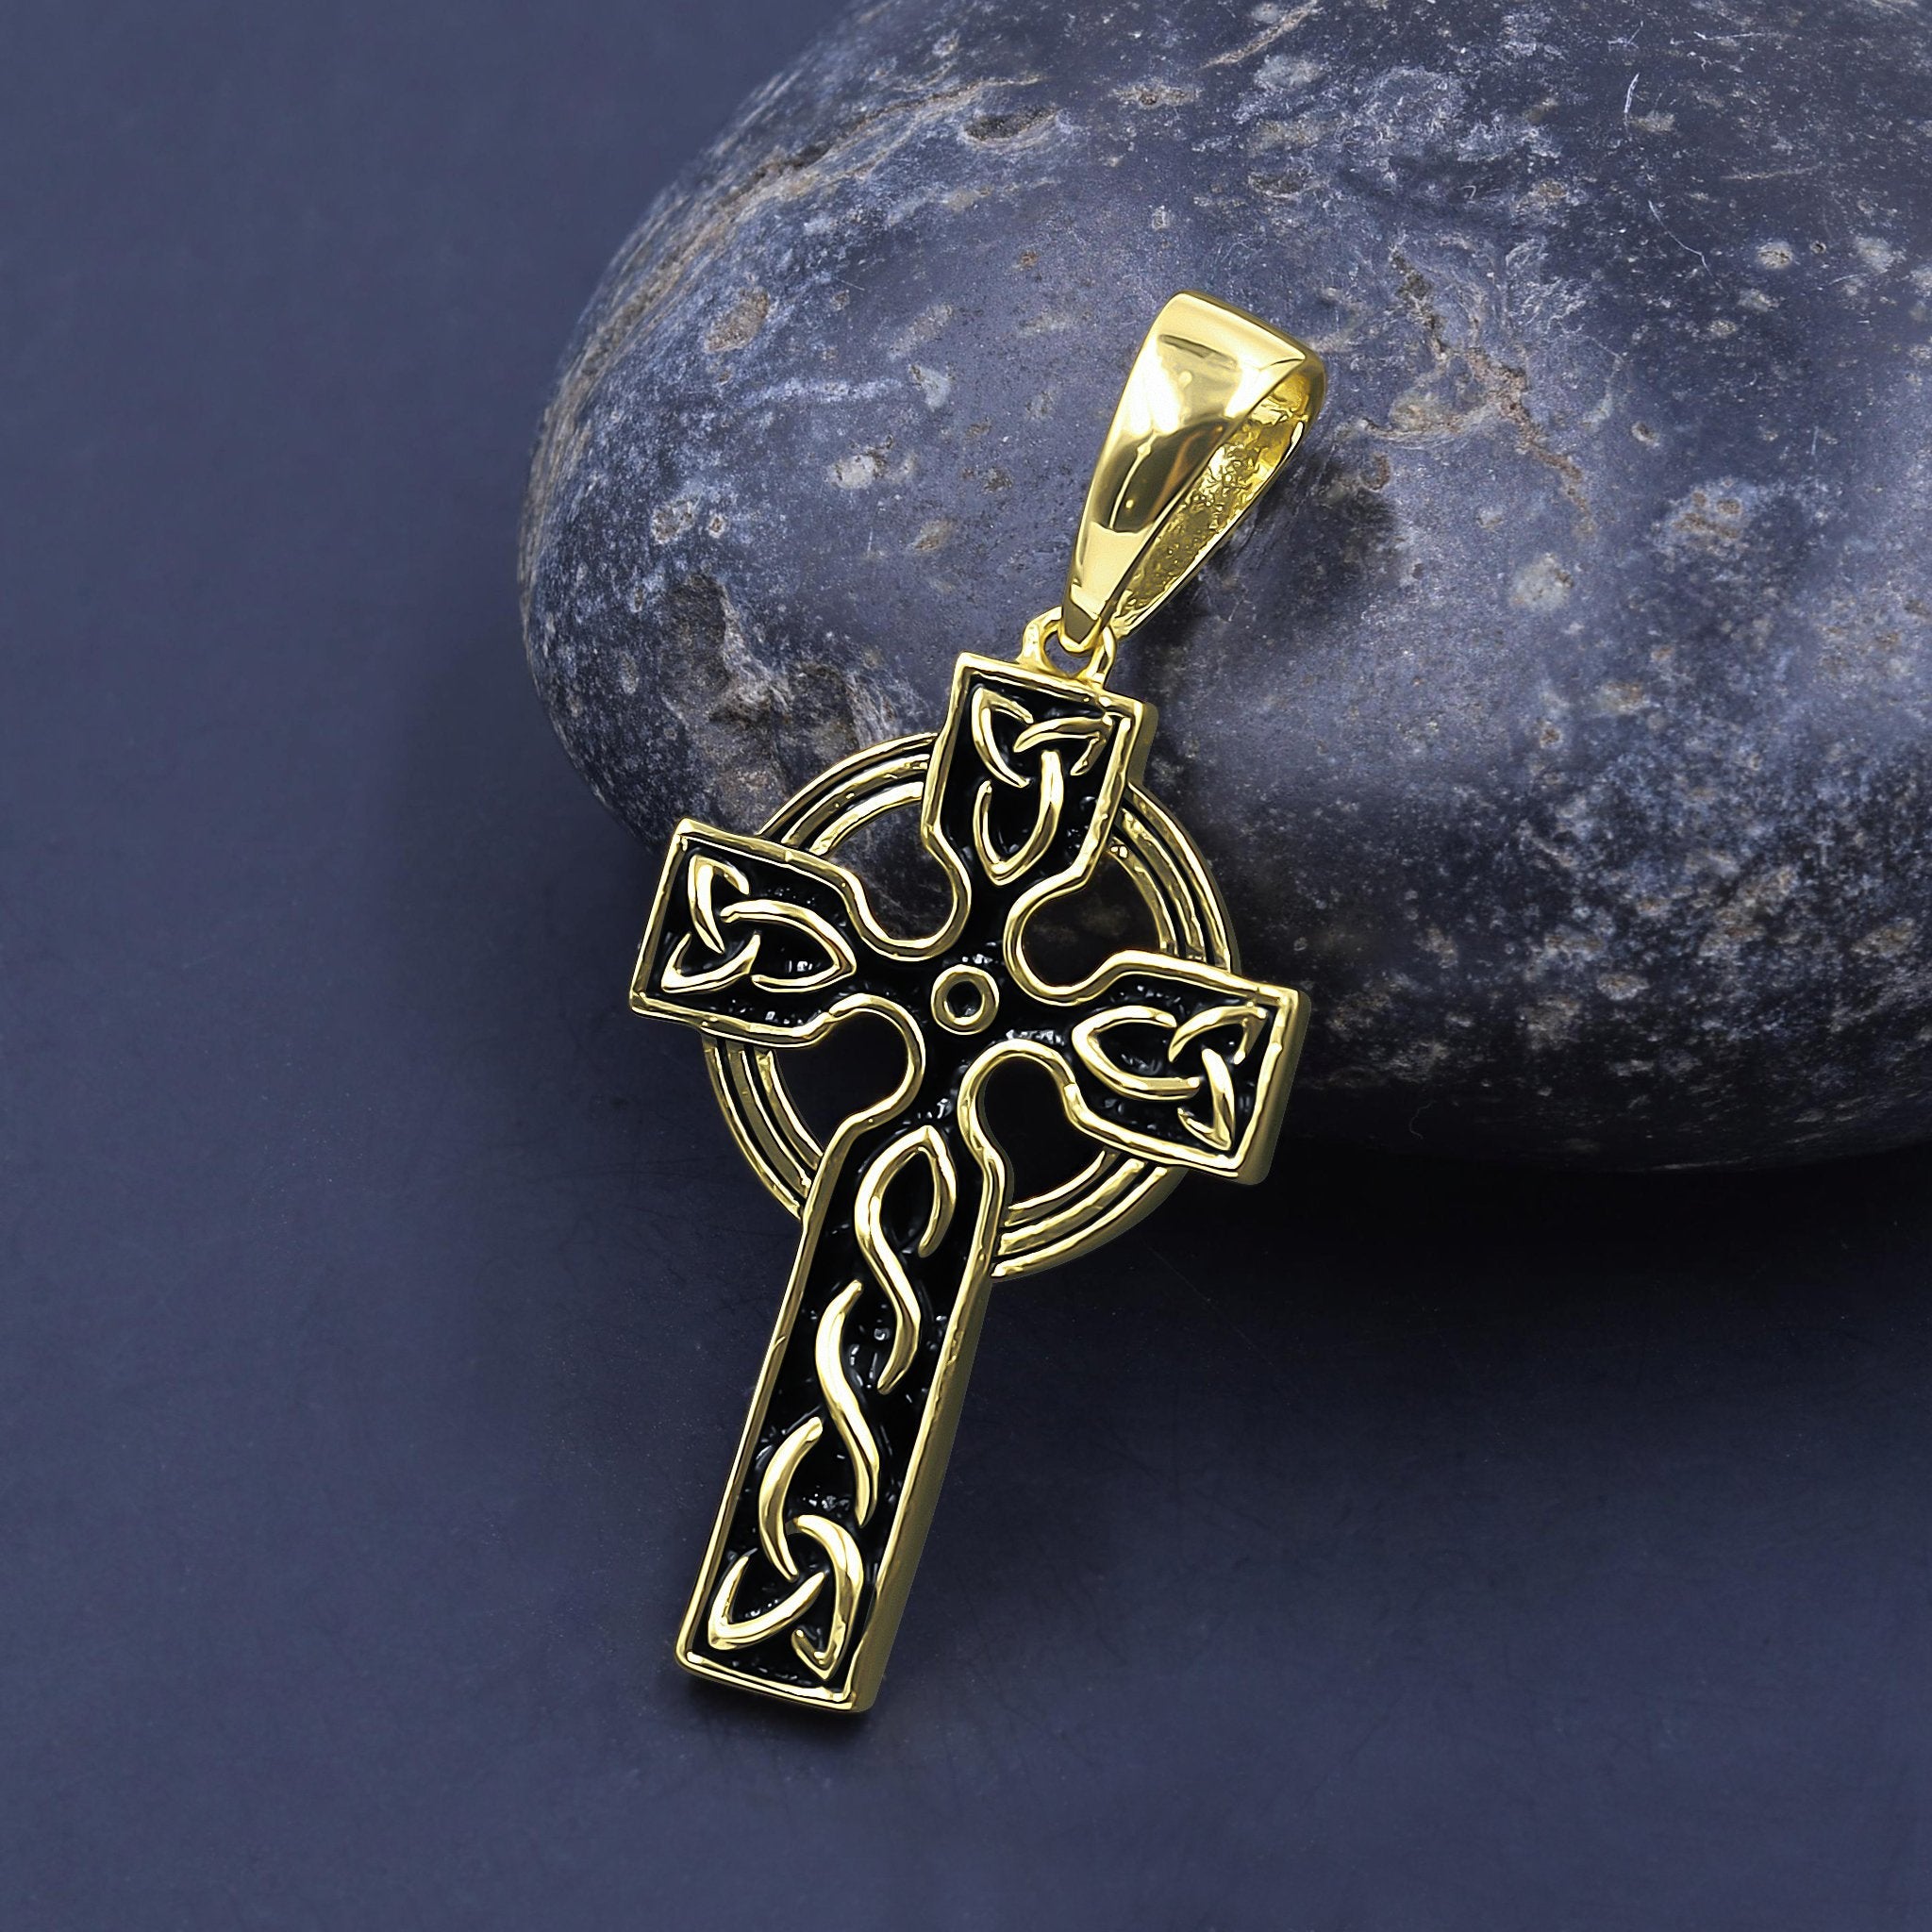 Celestial Silver Cross Pendant | Sterling Silver CZ Stones | 45mm Length Bijou Her